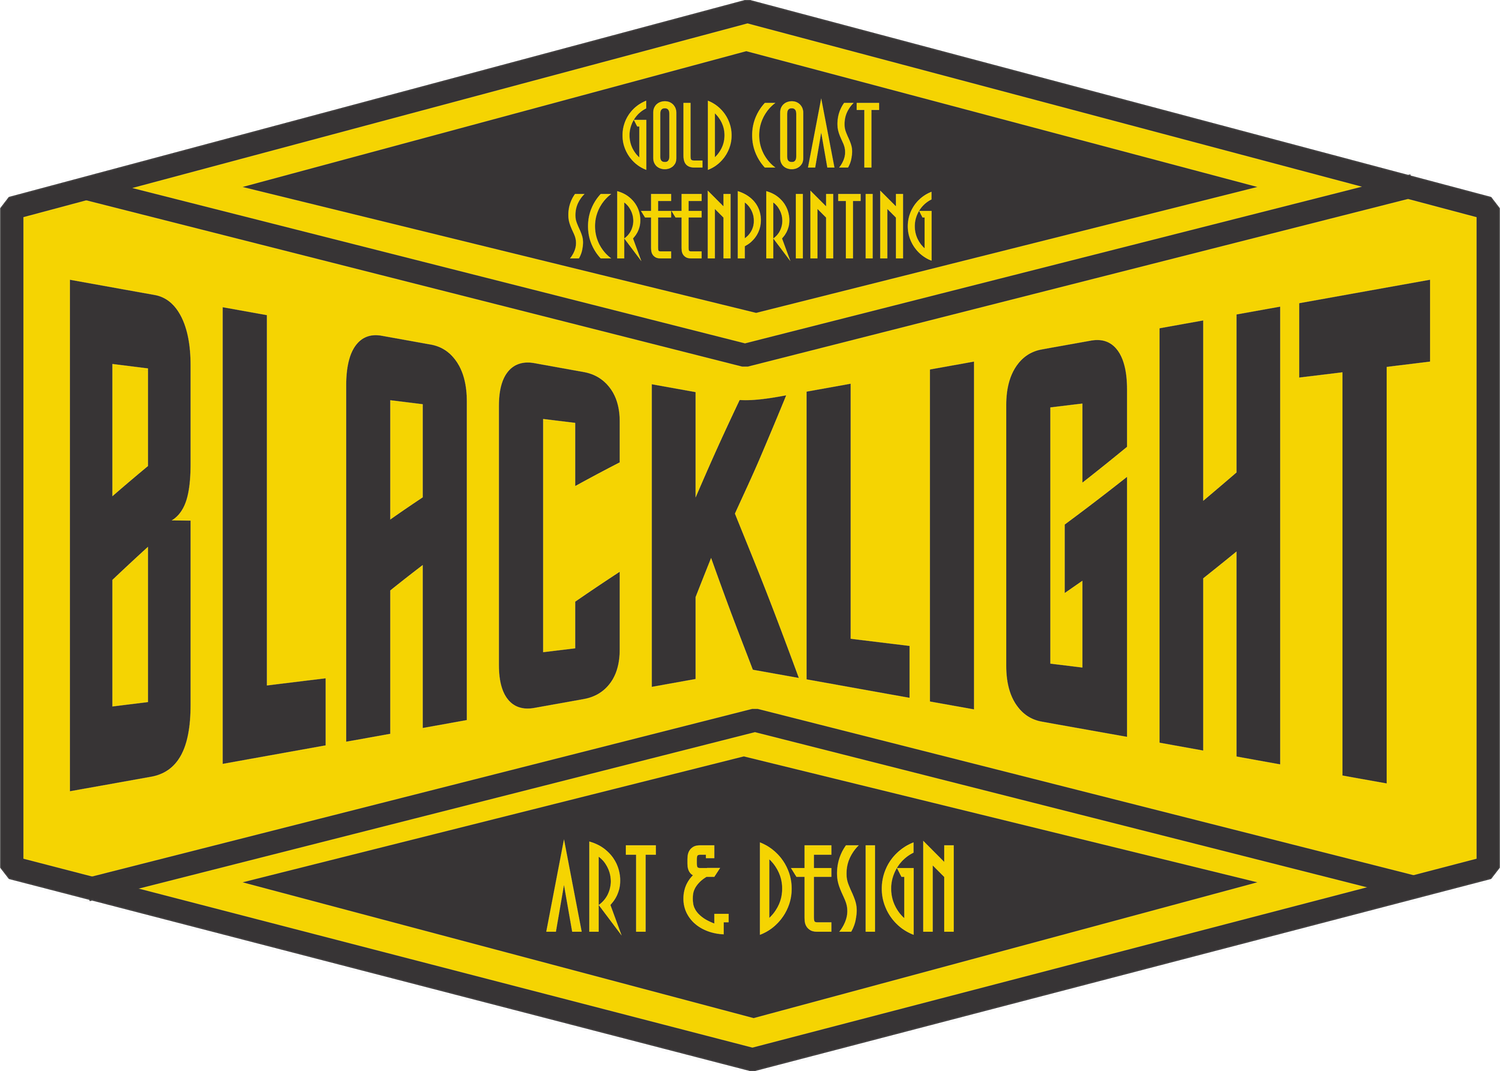 Blacklight Art and Design Screen printing Gold Coast